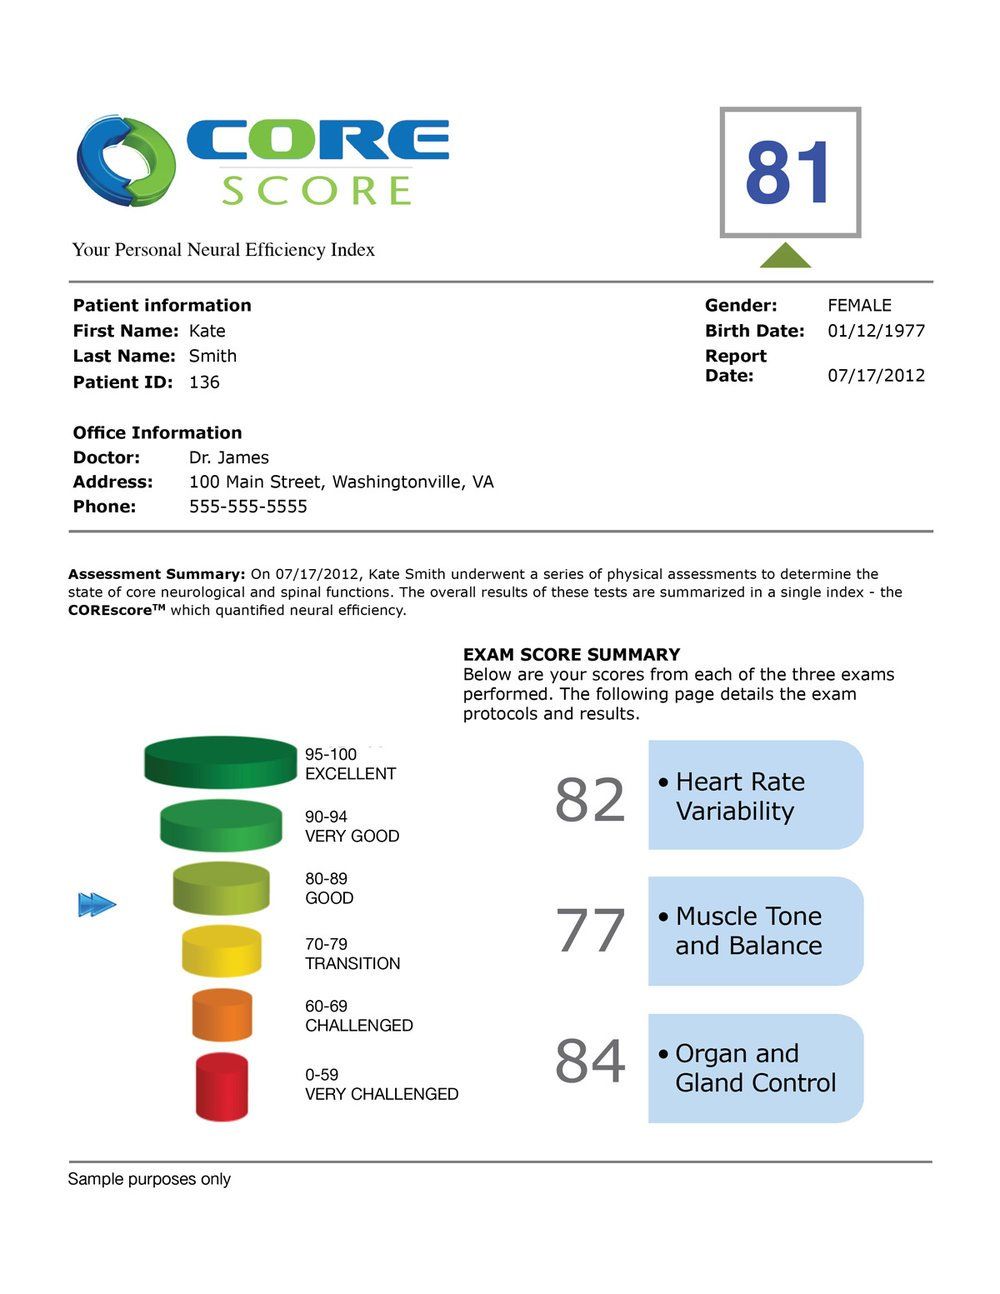 Core Score - Personal Neutral Efficiency Index